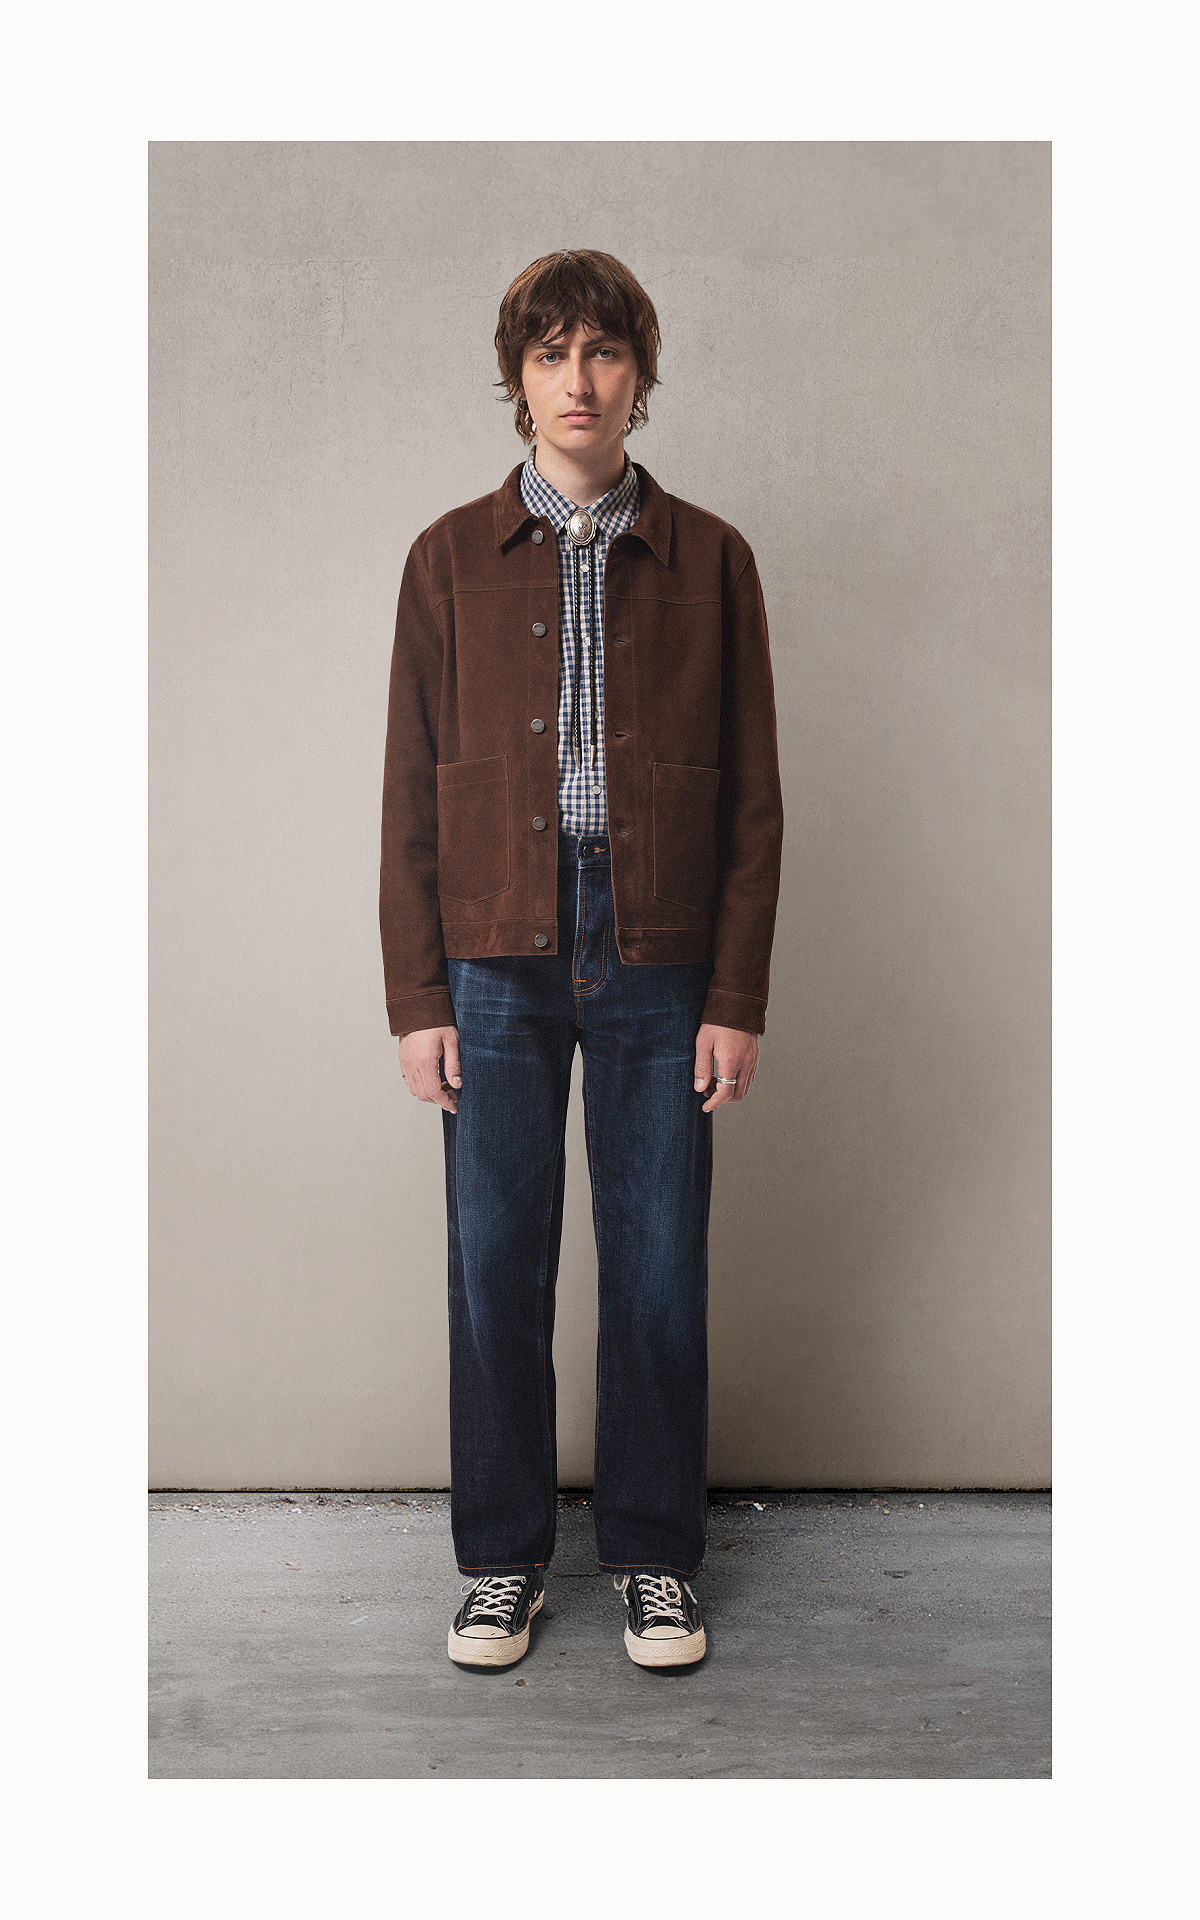 Kai D Utility — British Striped Wool Trousers - Deep Brown - 30, 32, 34